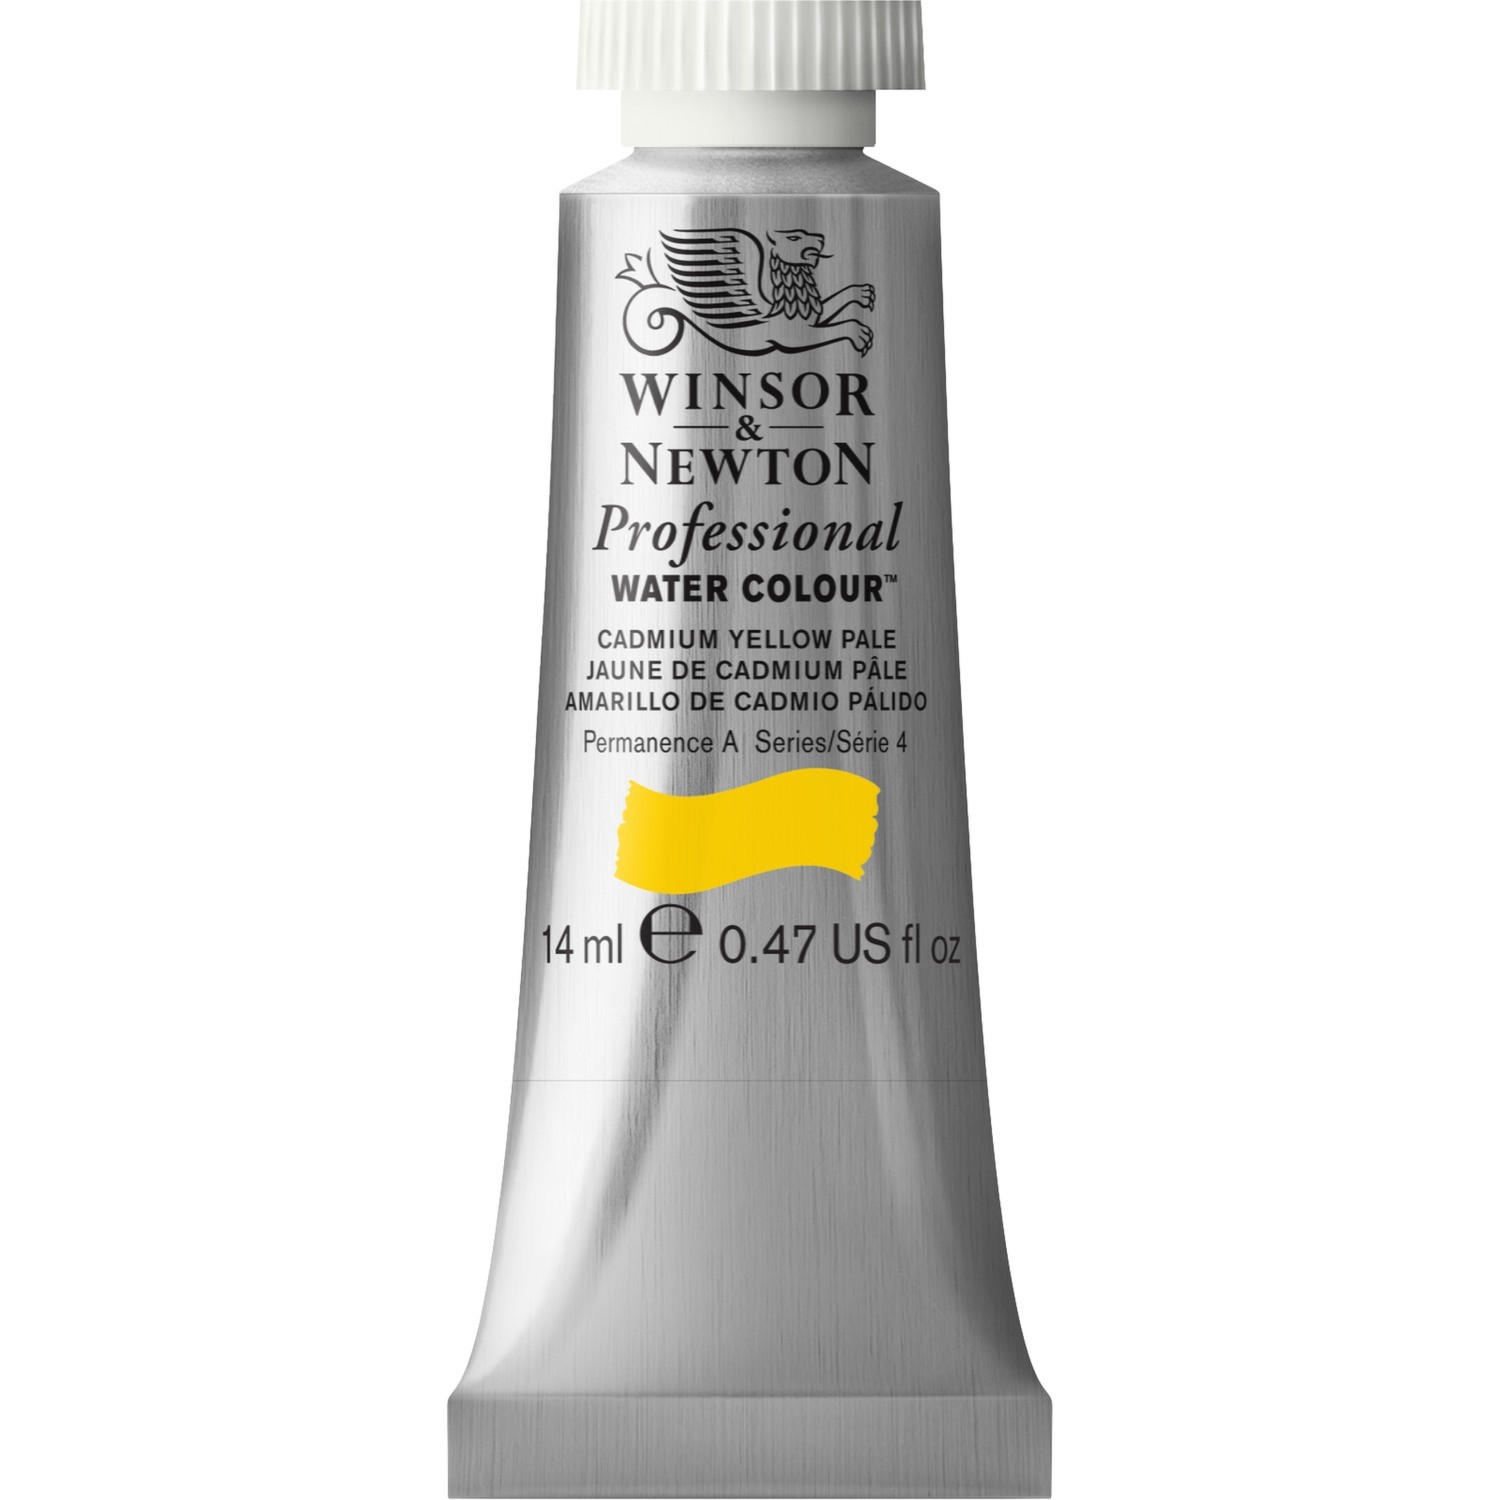 Winsor and Newton Professional Pale Cadium Yellow Watercolour Paint 14ml Image 1